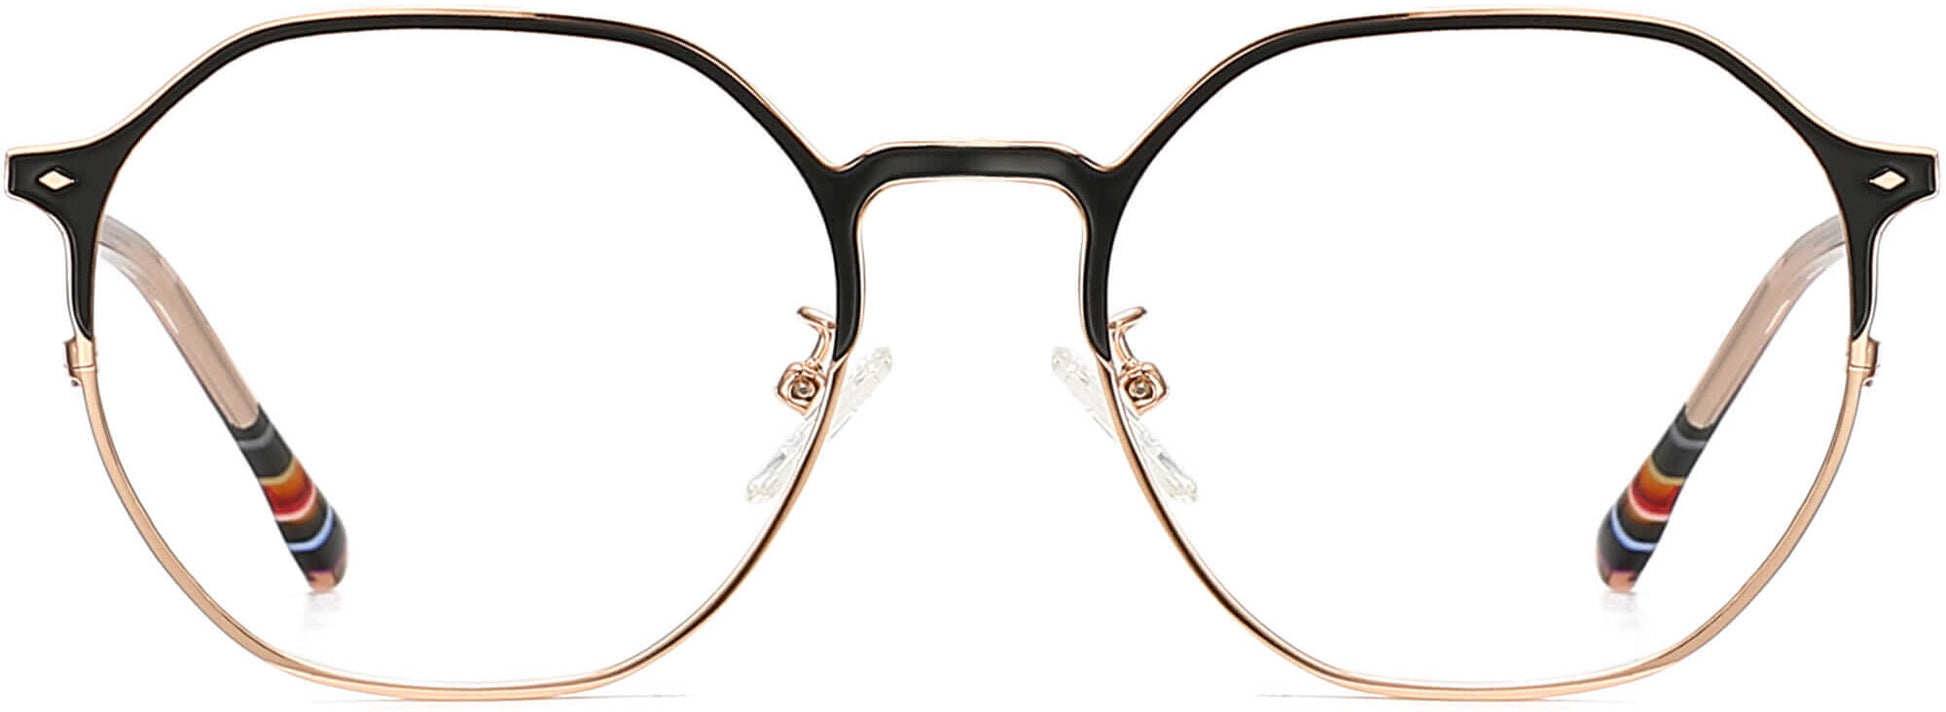 Raiden Geometric Black Eyeglasses from ANRRI, front view